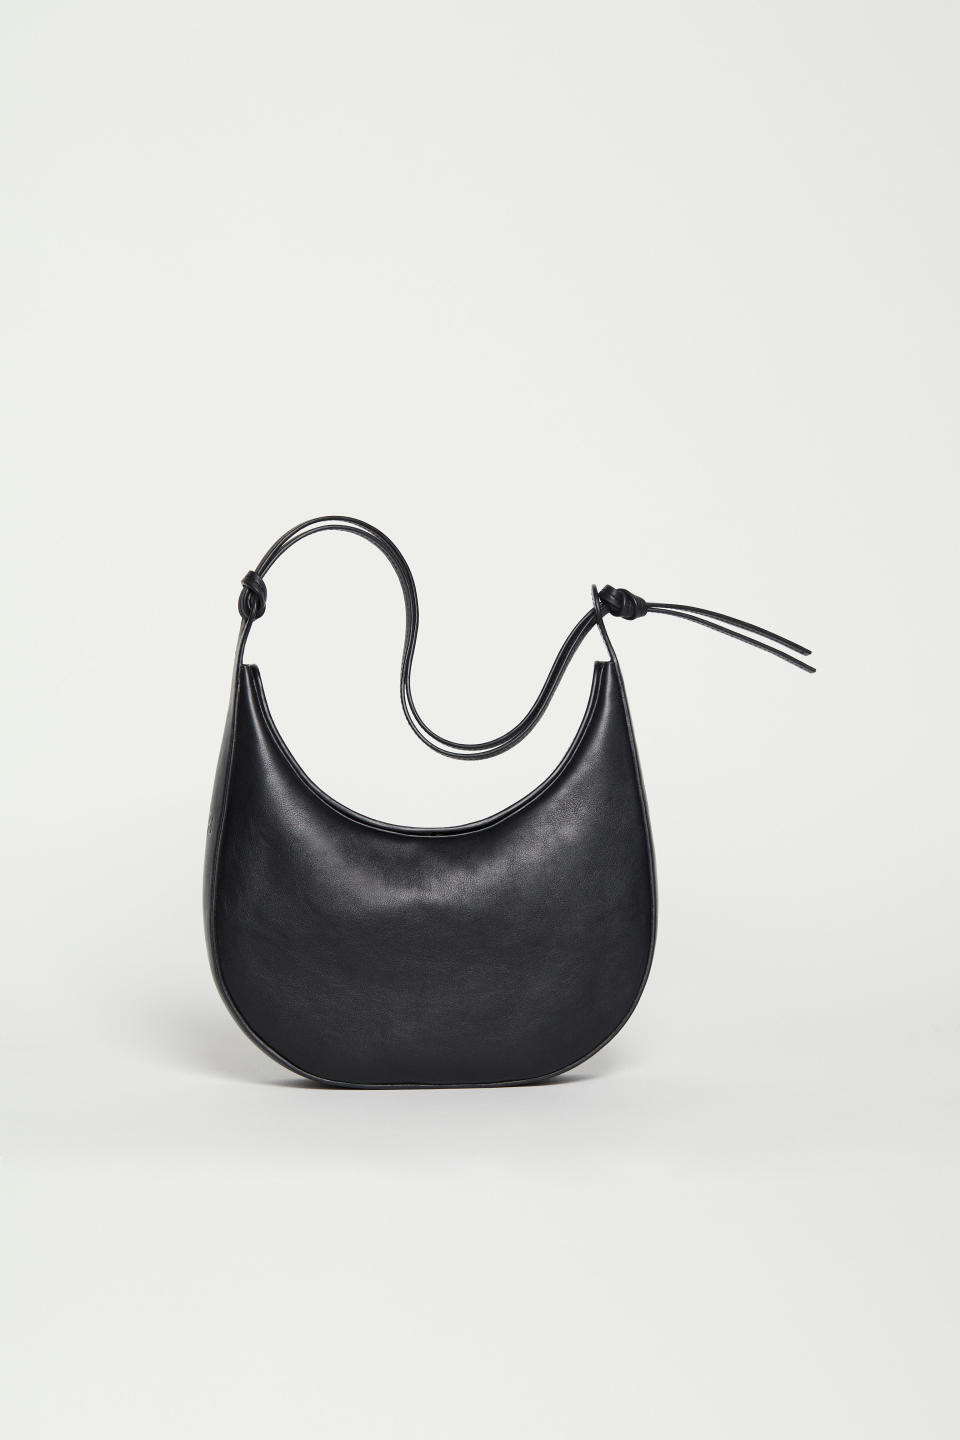 Reformation Medium Rosetta Bag Black Leather